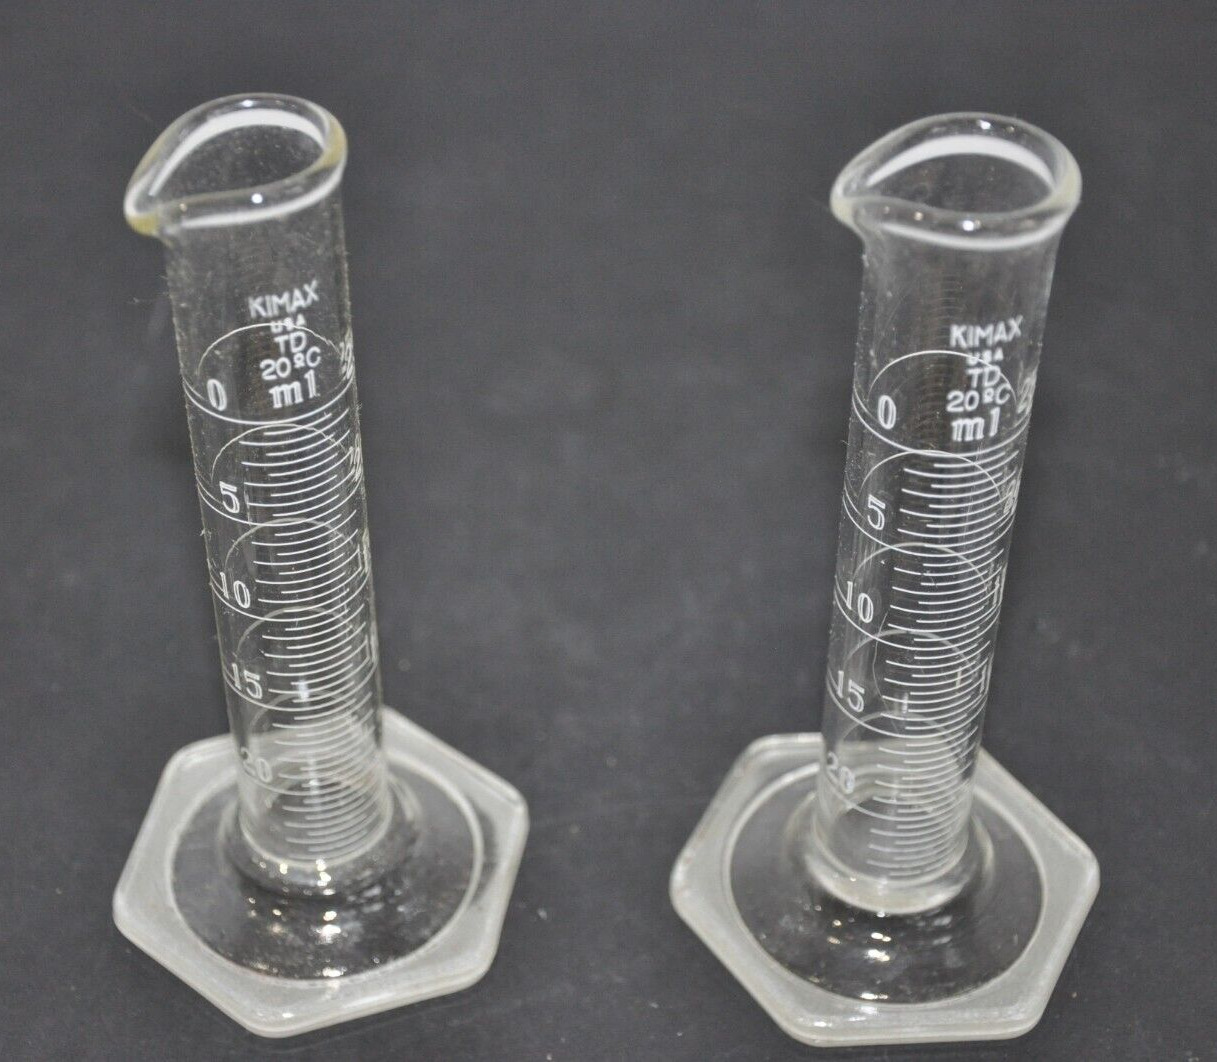 Vintage Kimax Laboratory Measuring Cylinder 25ml Lot of 2 with Safe-Gards